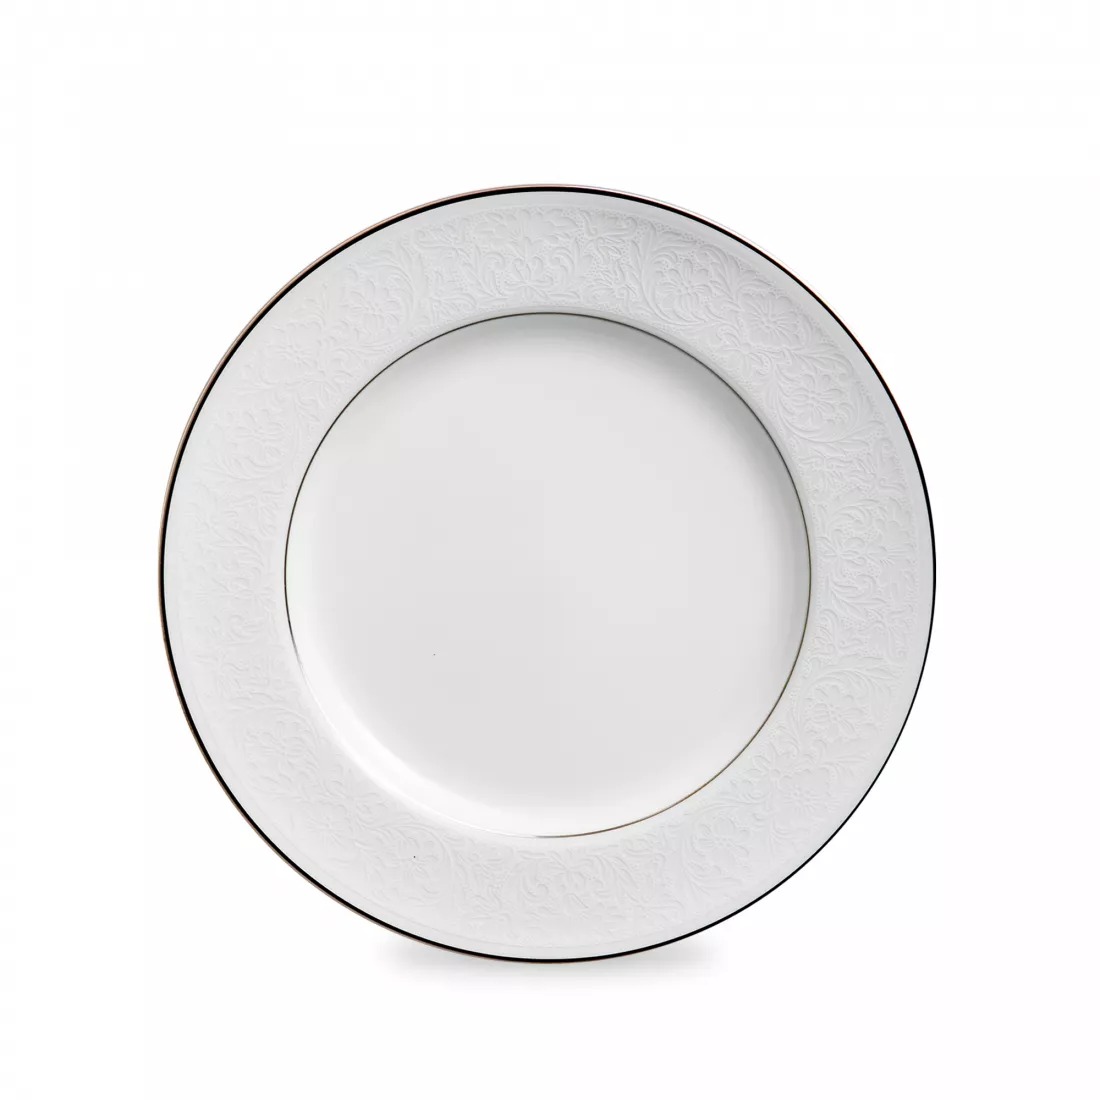 Тарелка закусочная Narumi Рошель 23 см тарелка закусочная марс 23 см mc g750000377c0363 matceramica